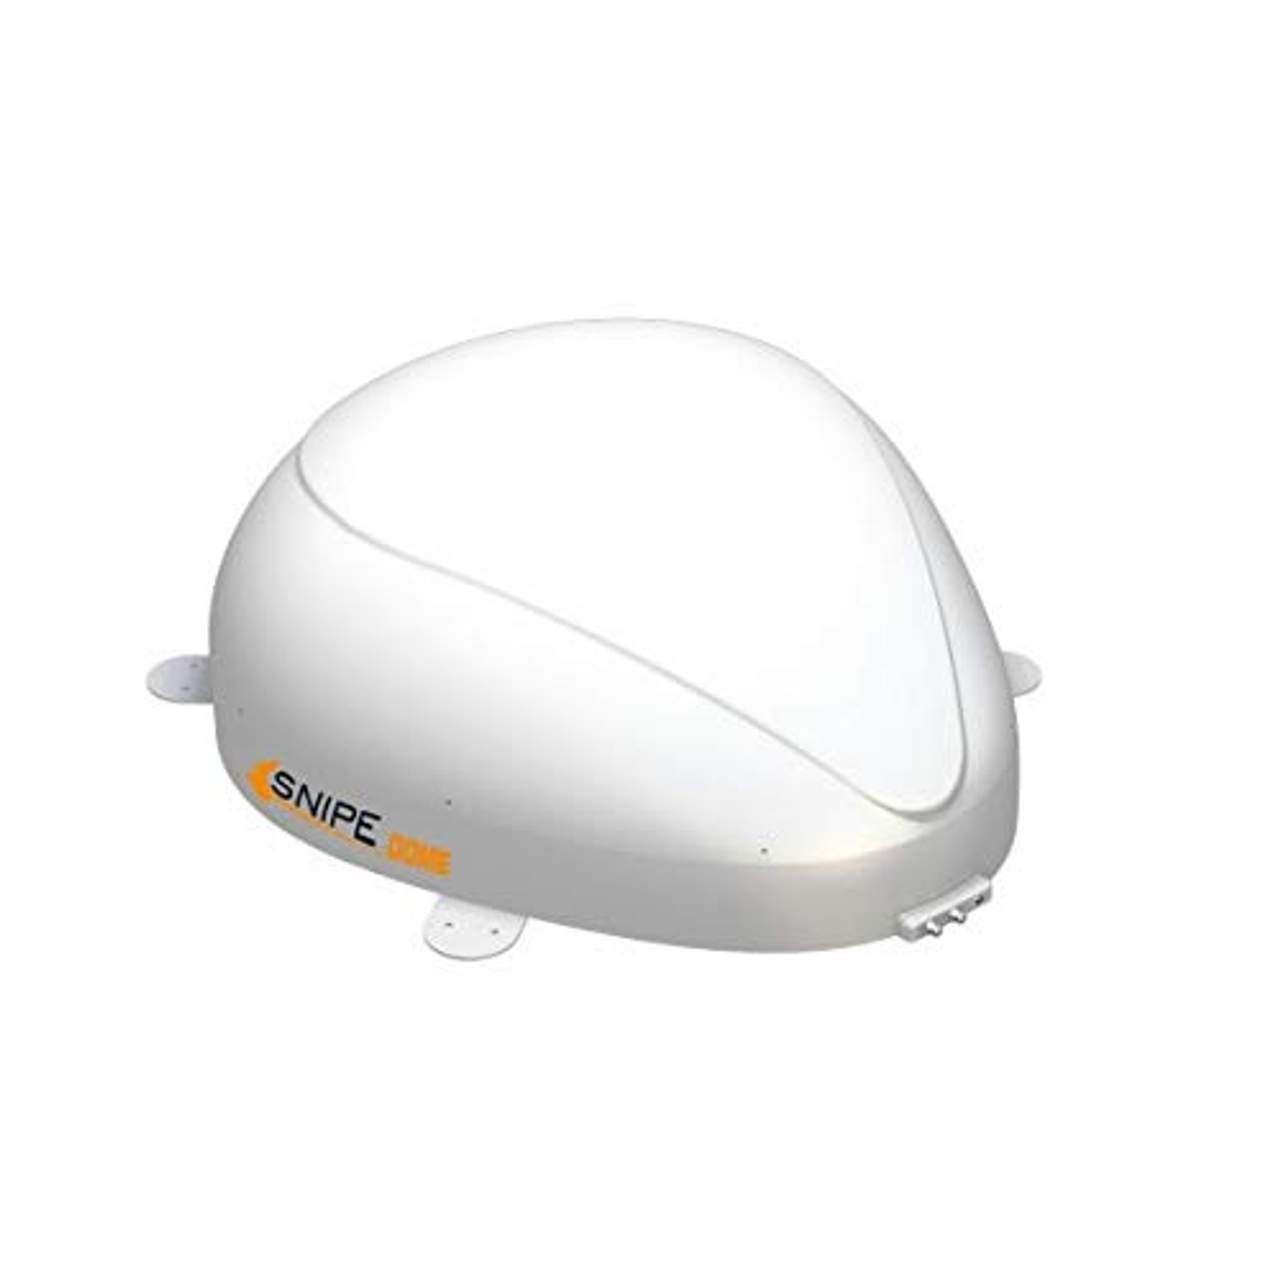 Selfsat Snipe Dome AD Single GPS Vollautomatische Satelliten Antenne